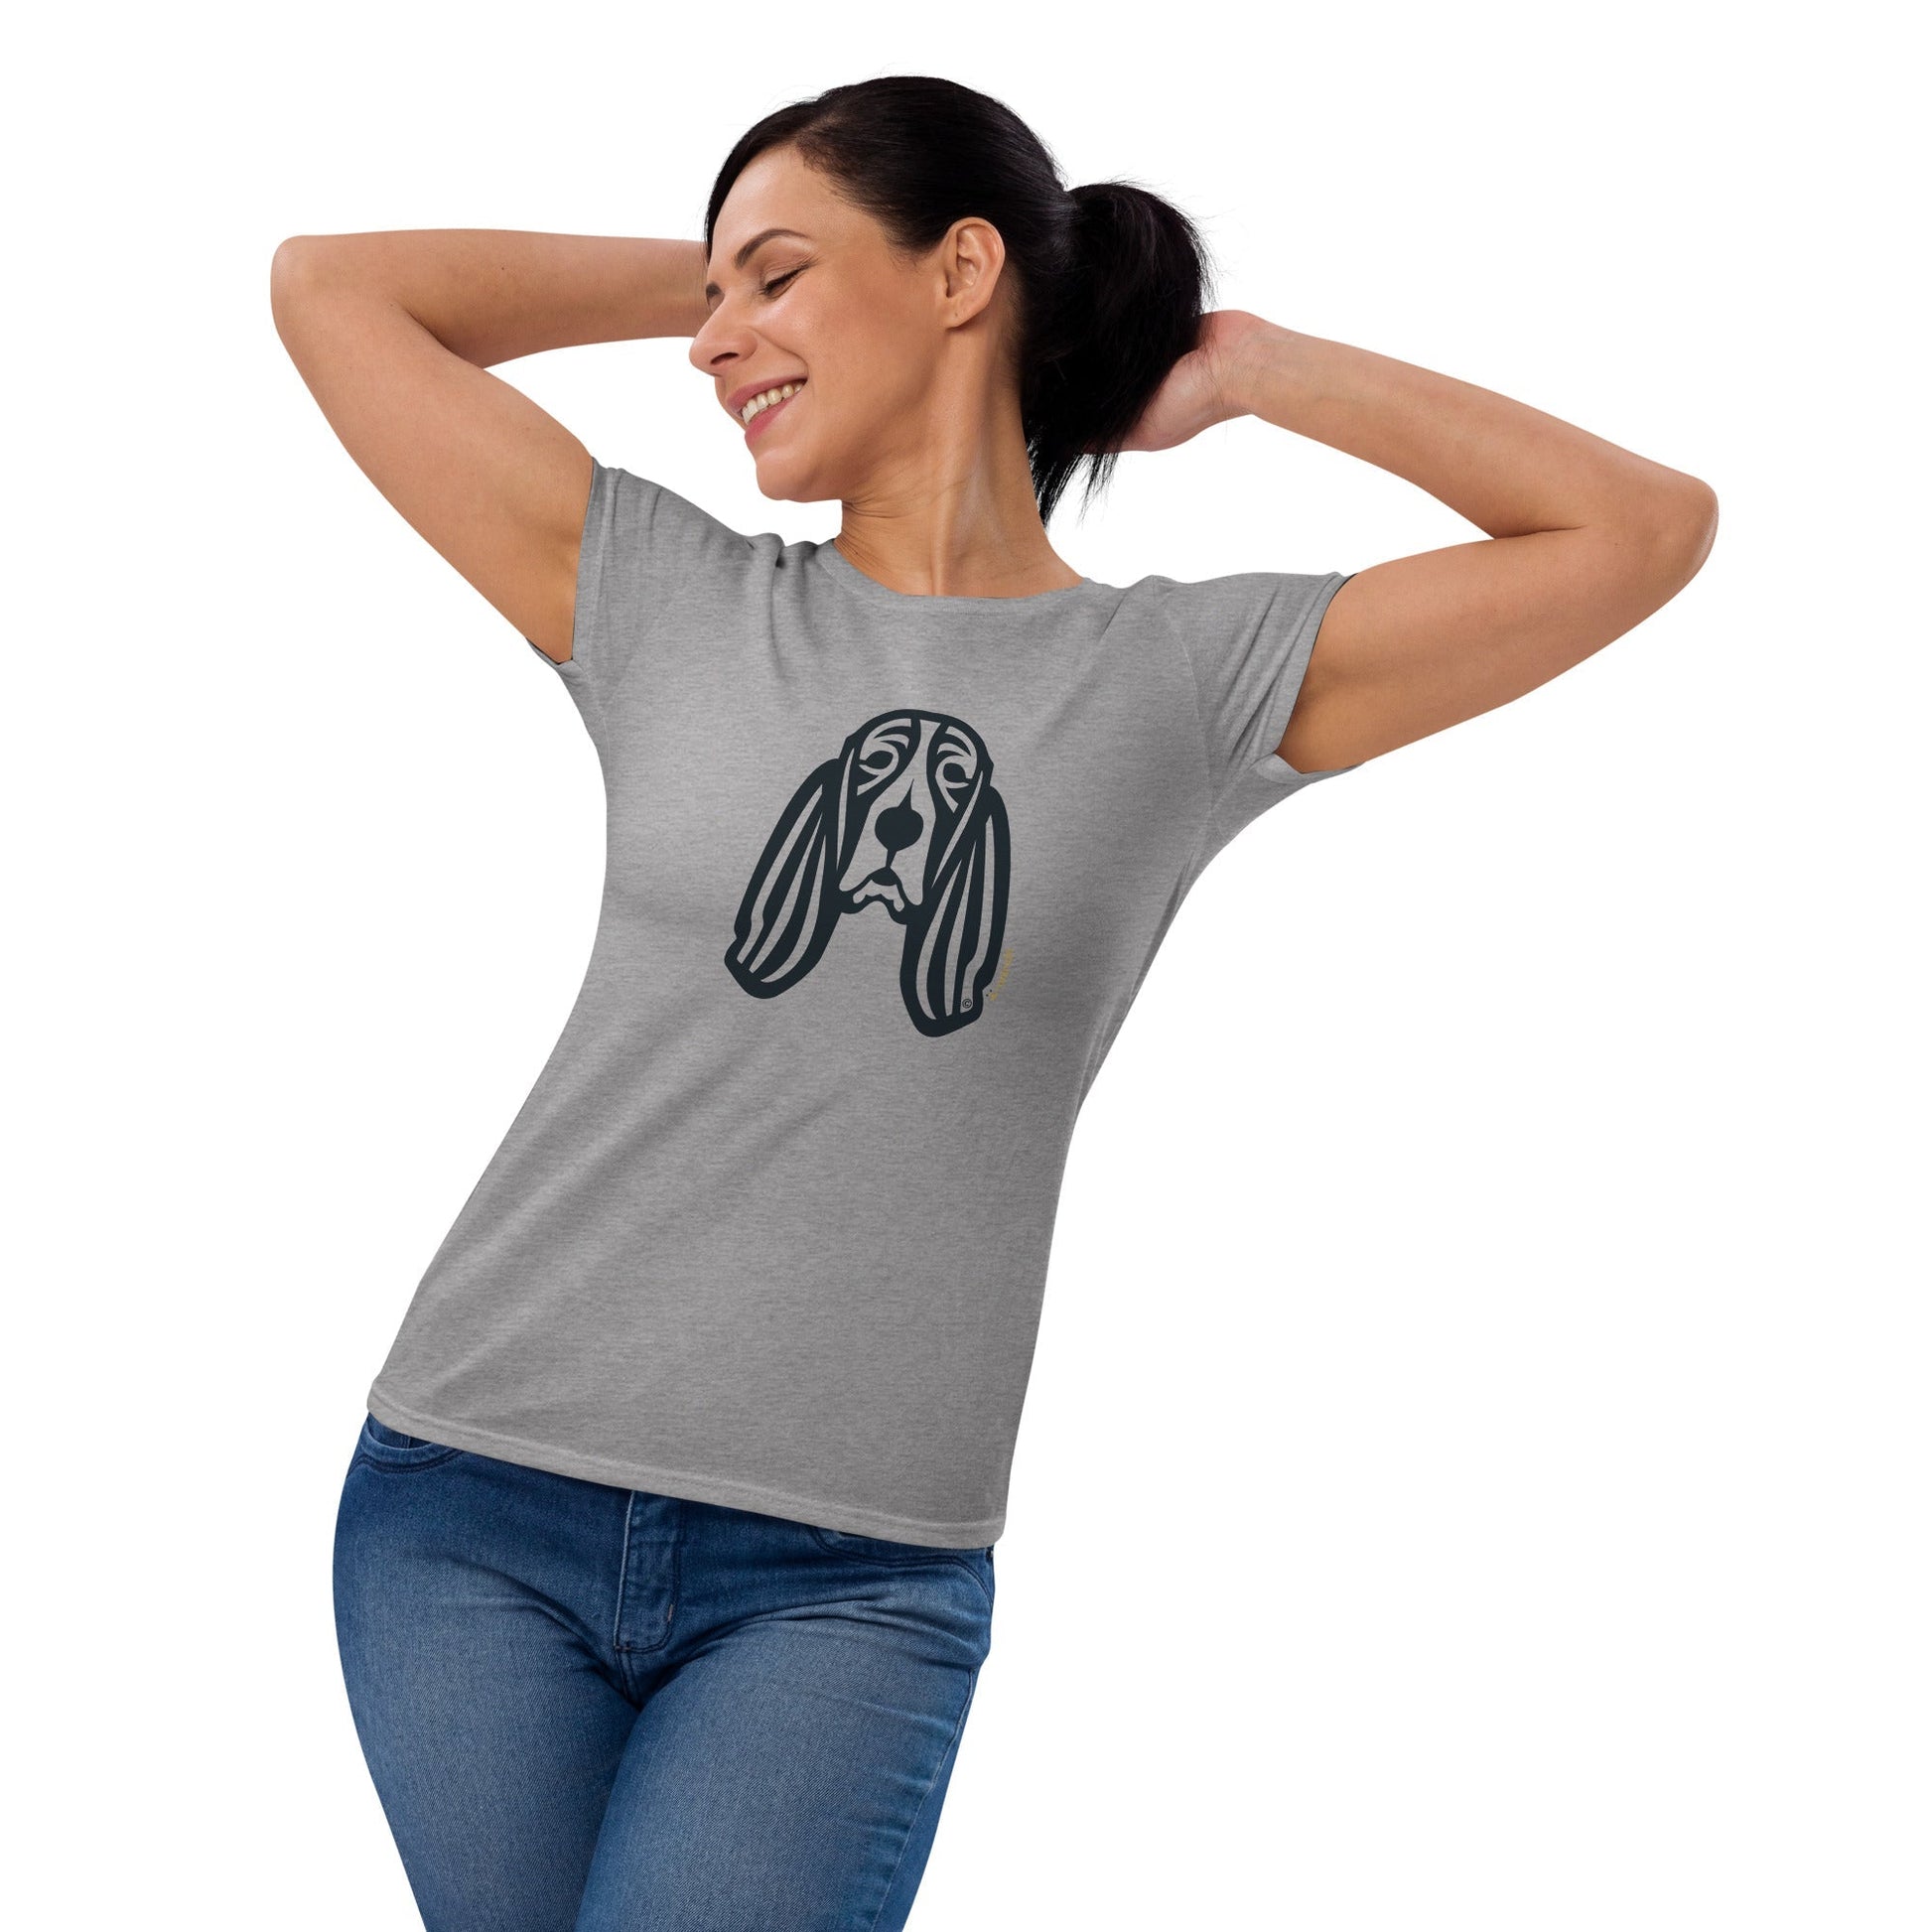 Camiseta feminina de manga curta - Basset Hound - Tribal - Cores Claras i-animals